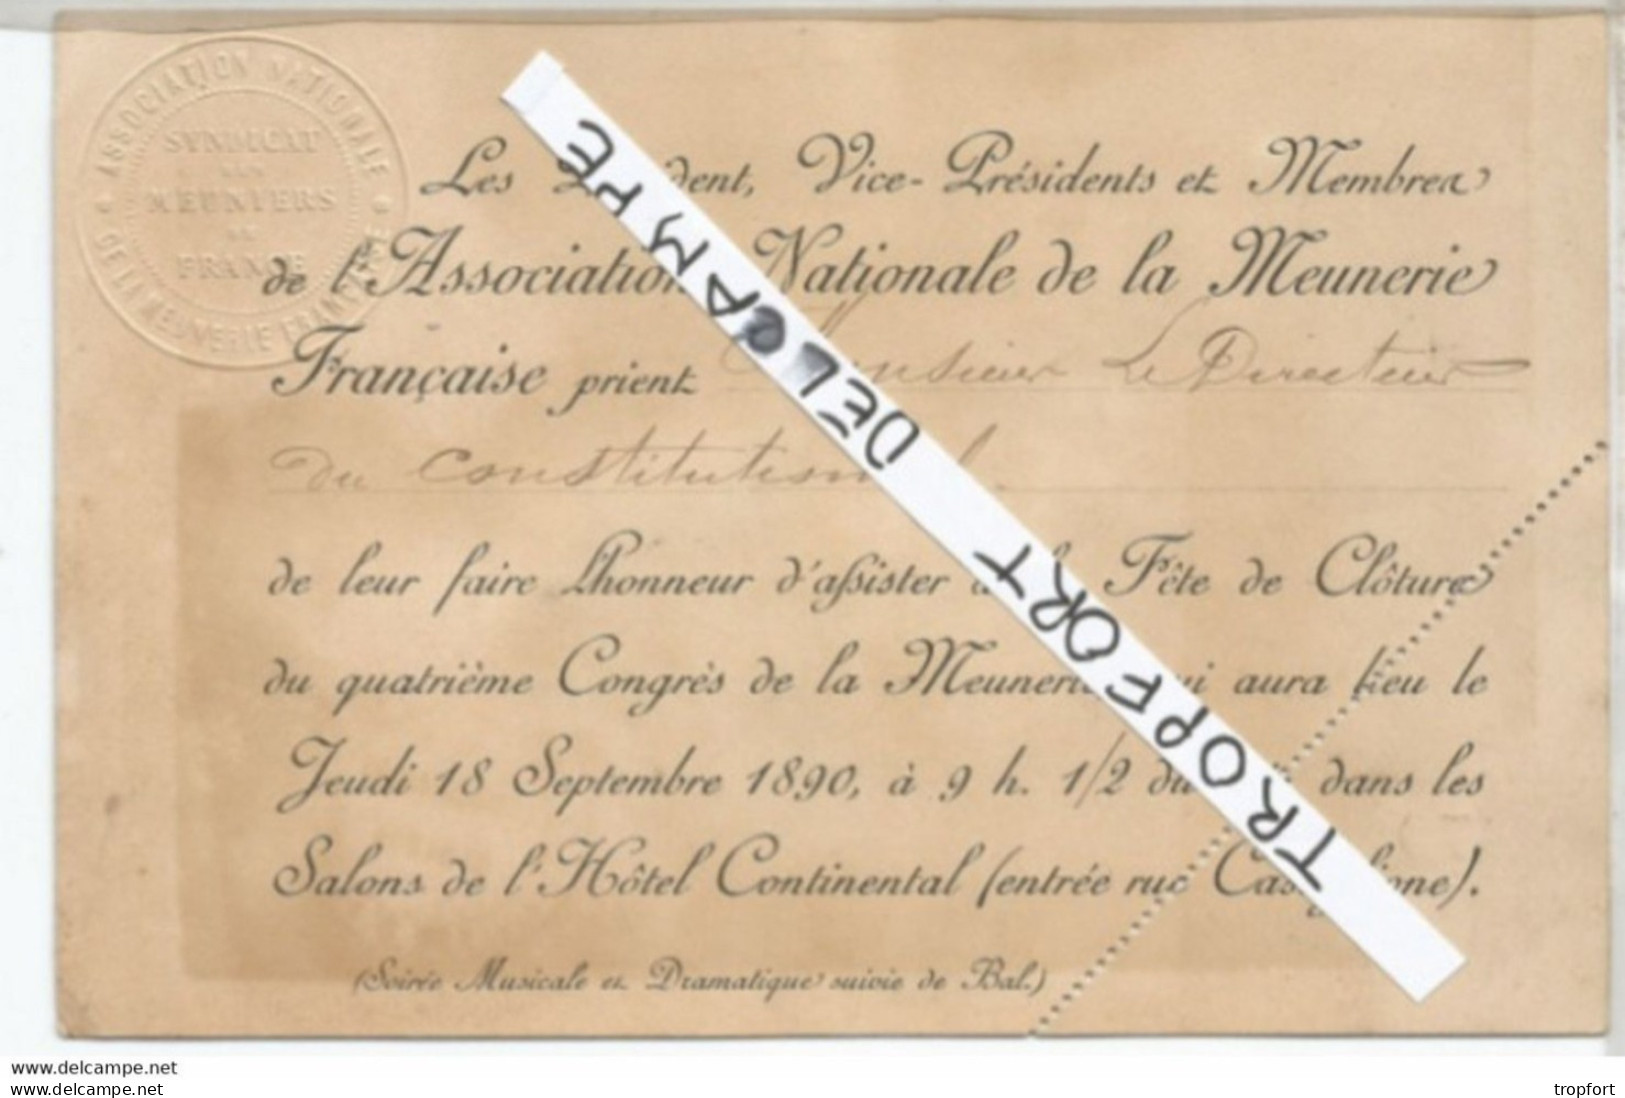 PK / CARTE ASSOCIATION NATIONALE DE LA MEUNERIE  INVITATION 1890  HOTEL CONTINENTAL // BAL CONGRES MEUNERIE - Membership Cards